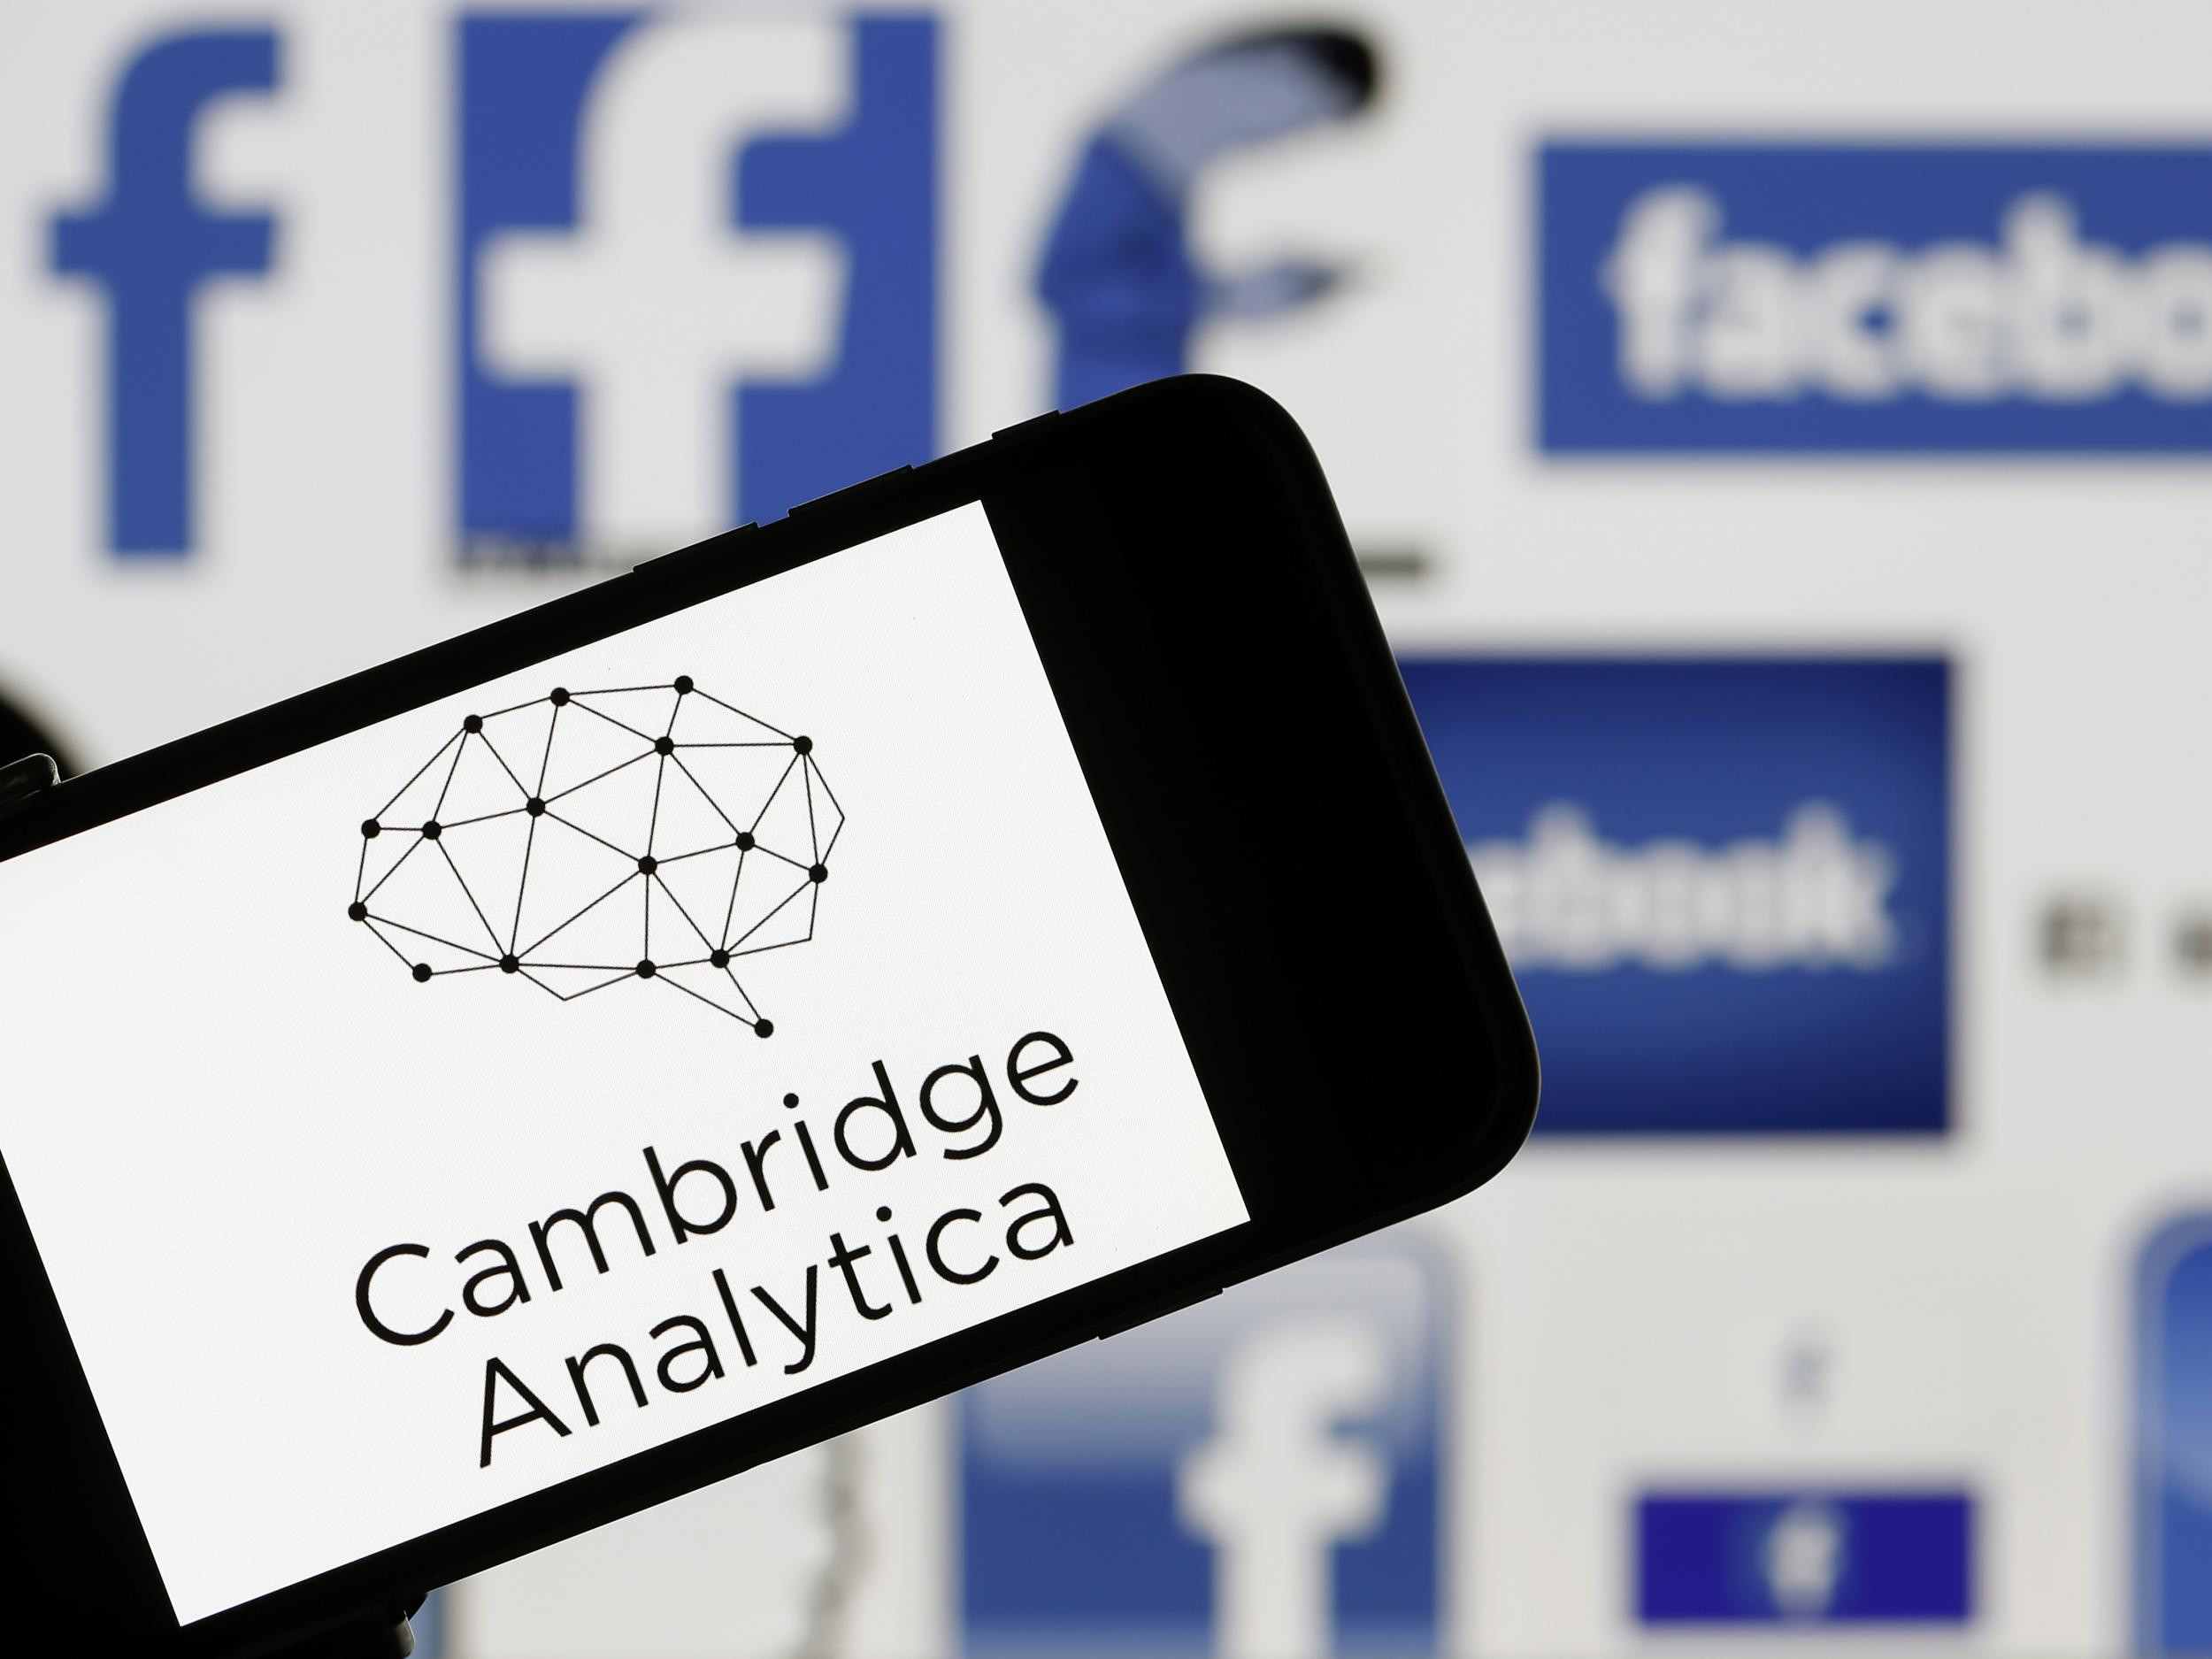 Facebook : Προσωπικά στοιχεία 87 εκατ. χρηστών κατέληξαν στην Cambridge Analytica